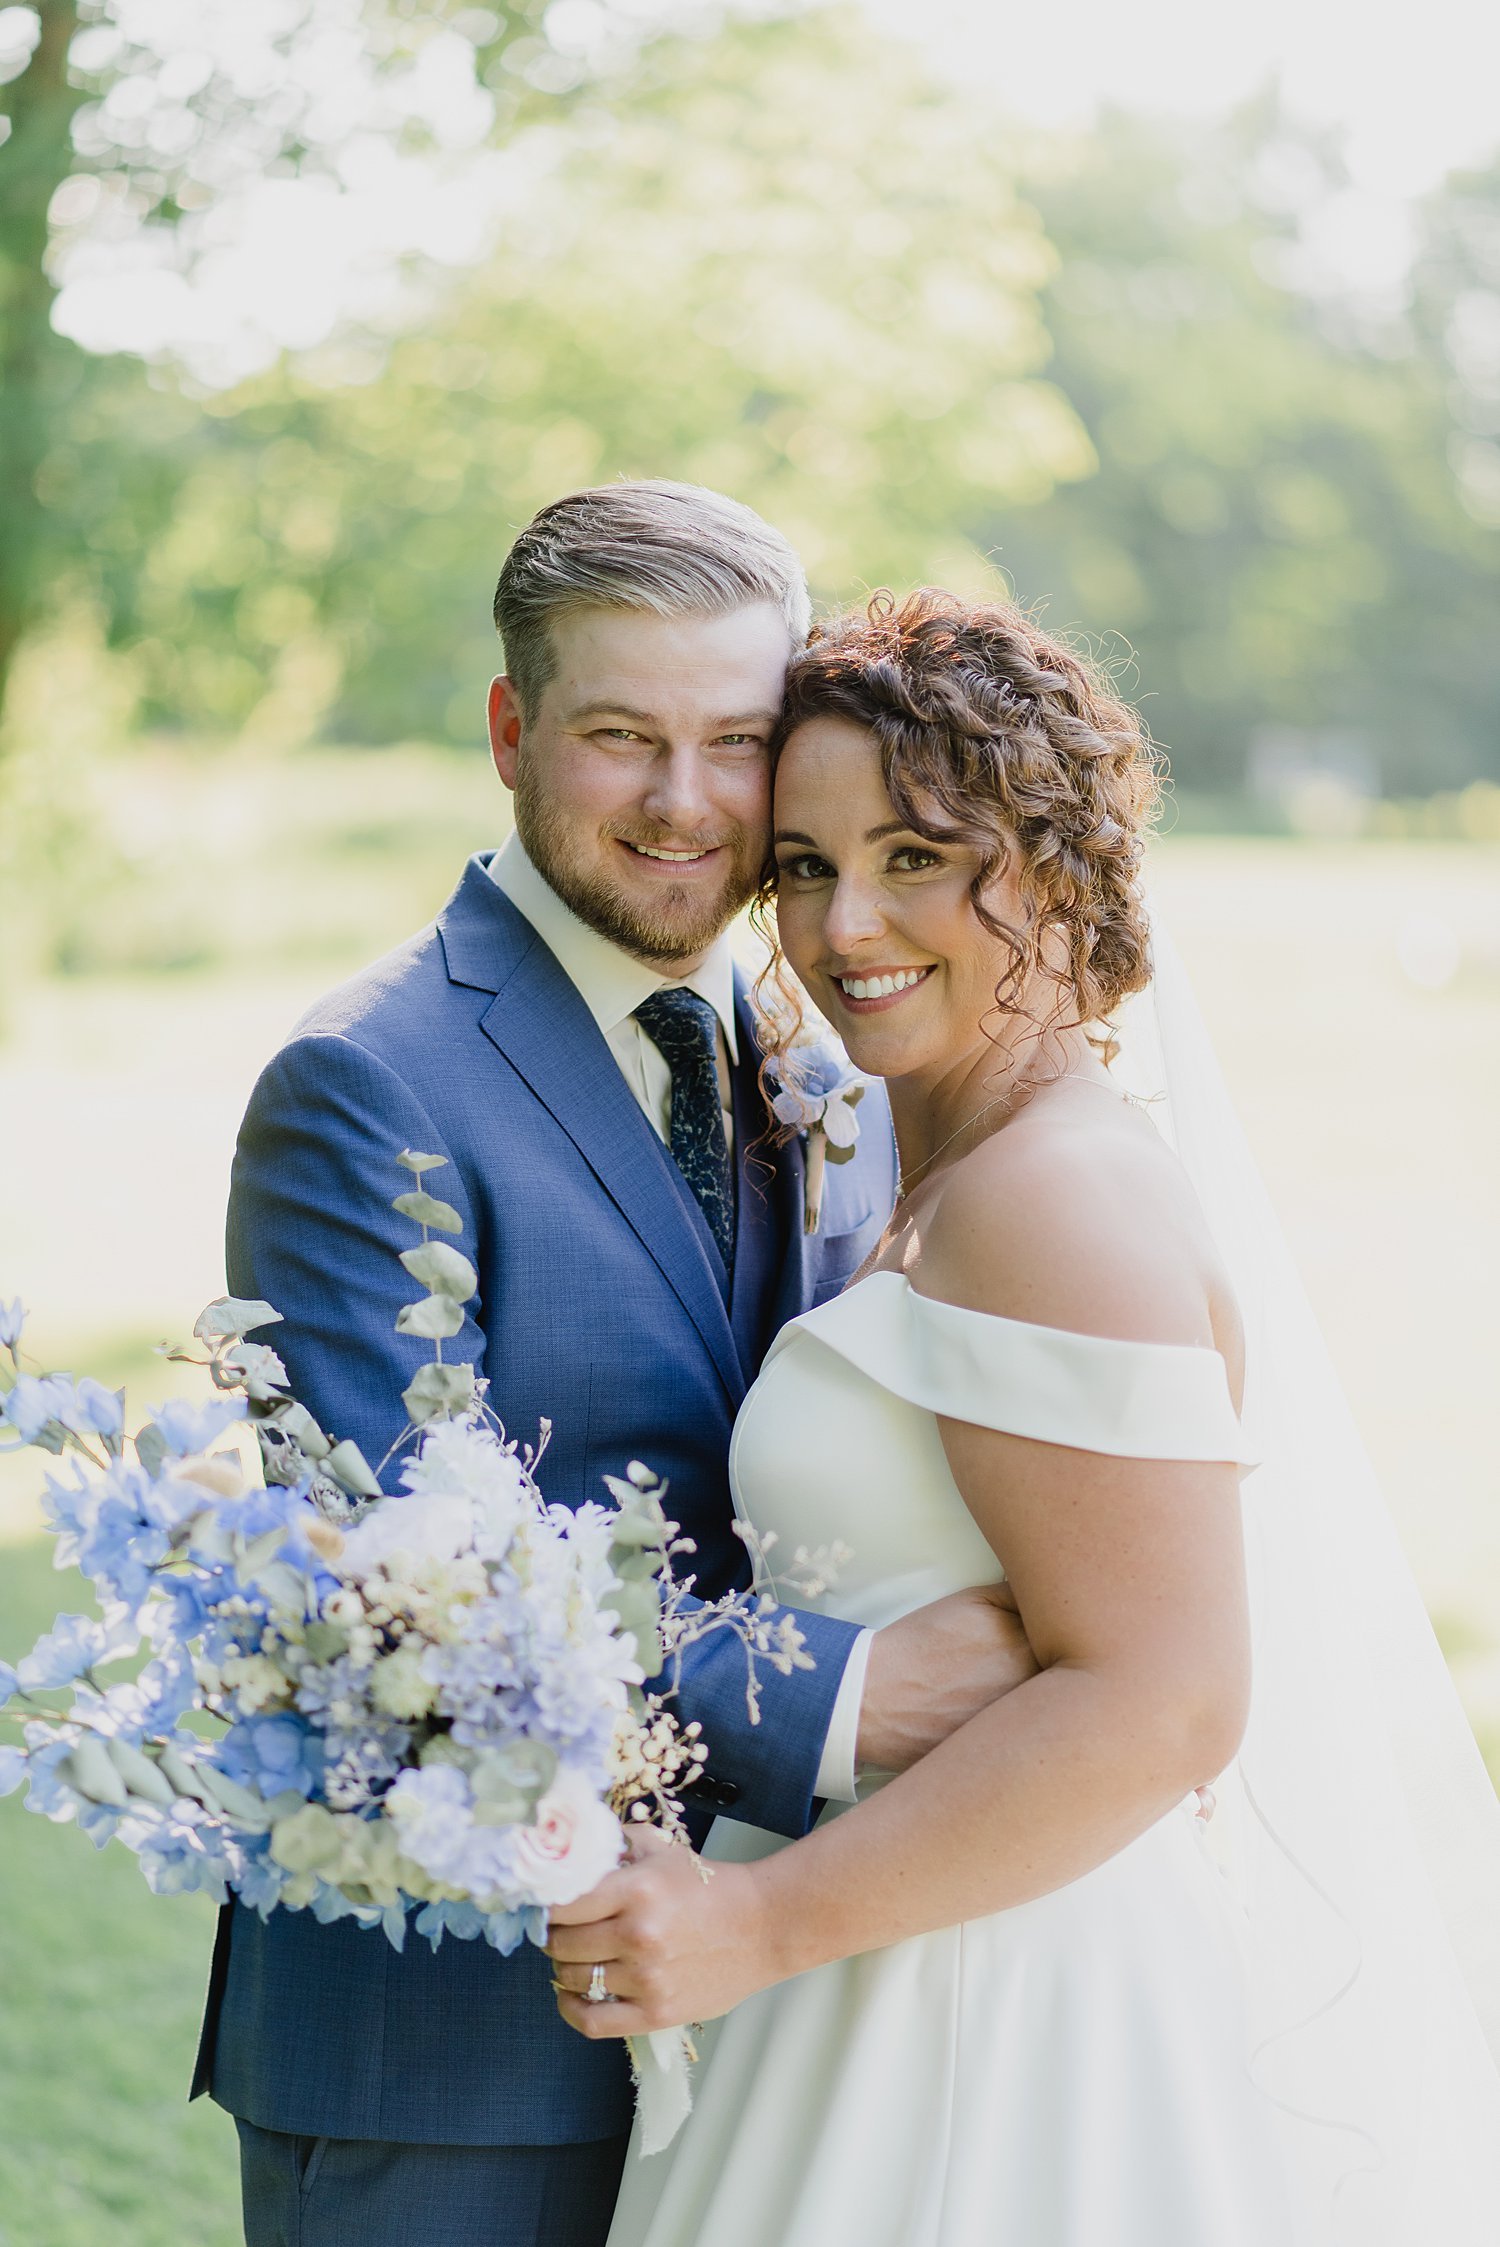 Elegant Summer Backyard Tented Wedding in Sydenham, Ontario | Prince Edward County Wedding Photographer | Holly McMurter Photographs_0055.jpg